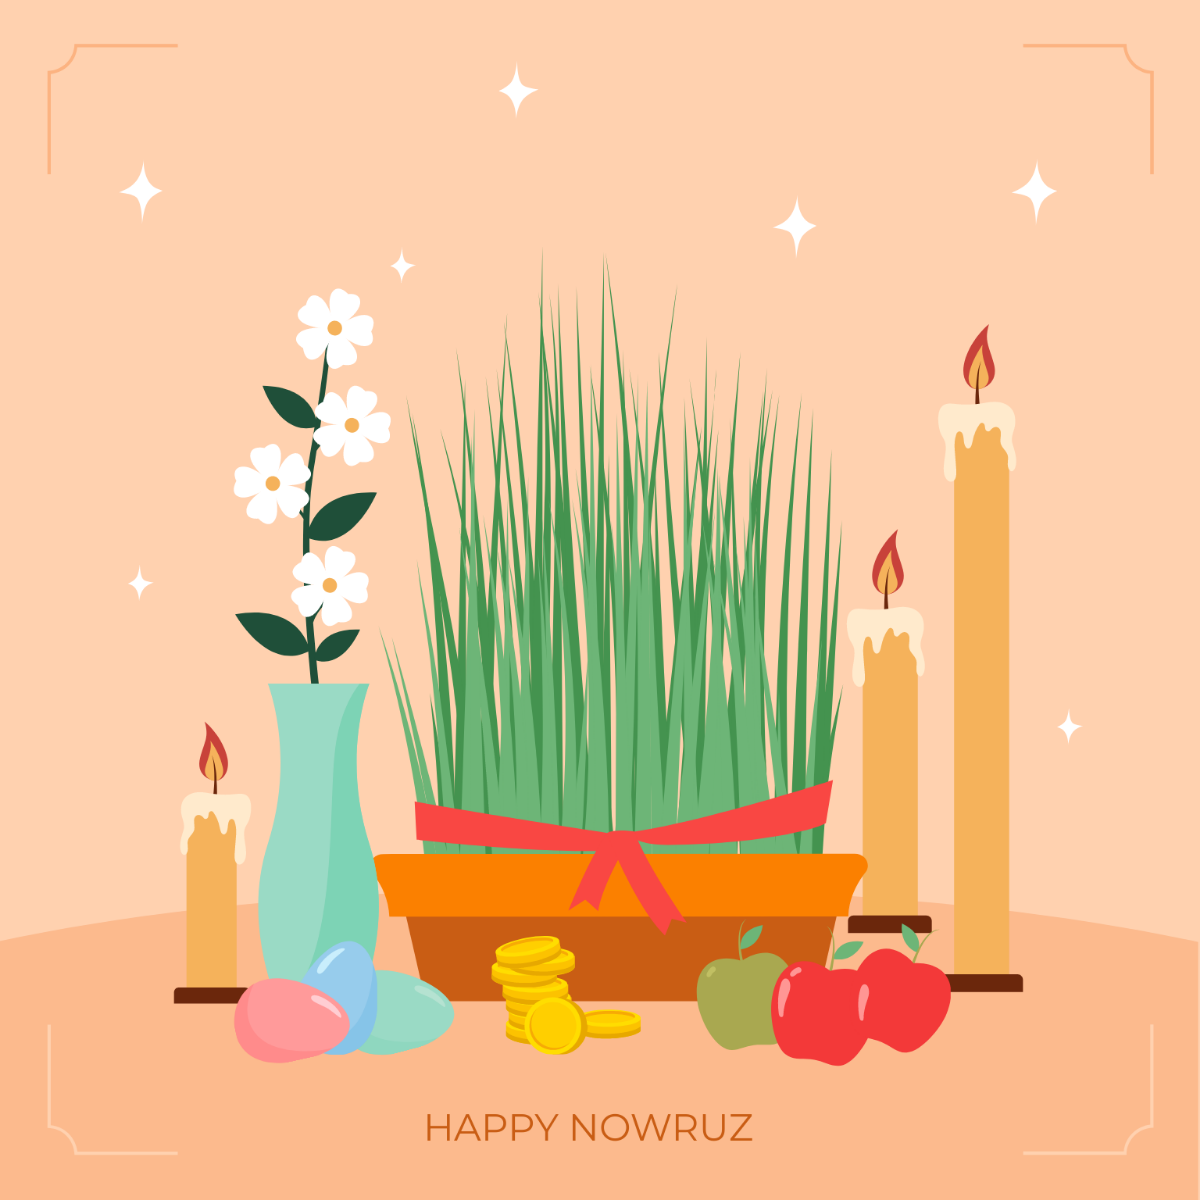 Free Nowruz Image Template